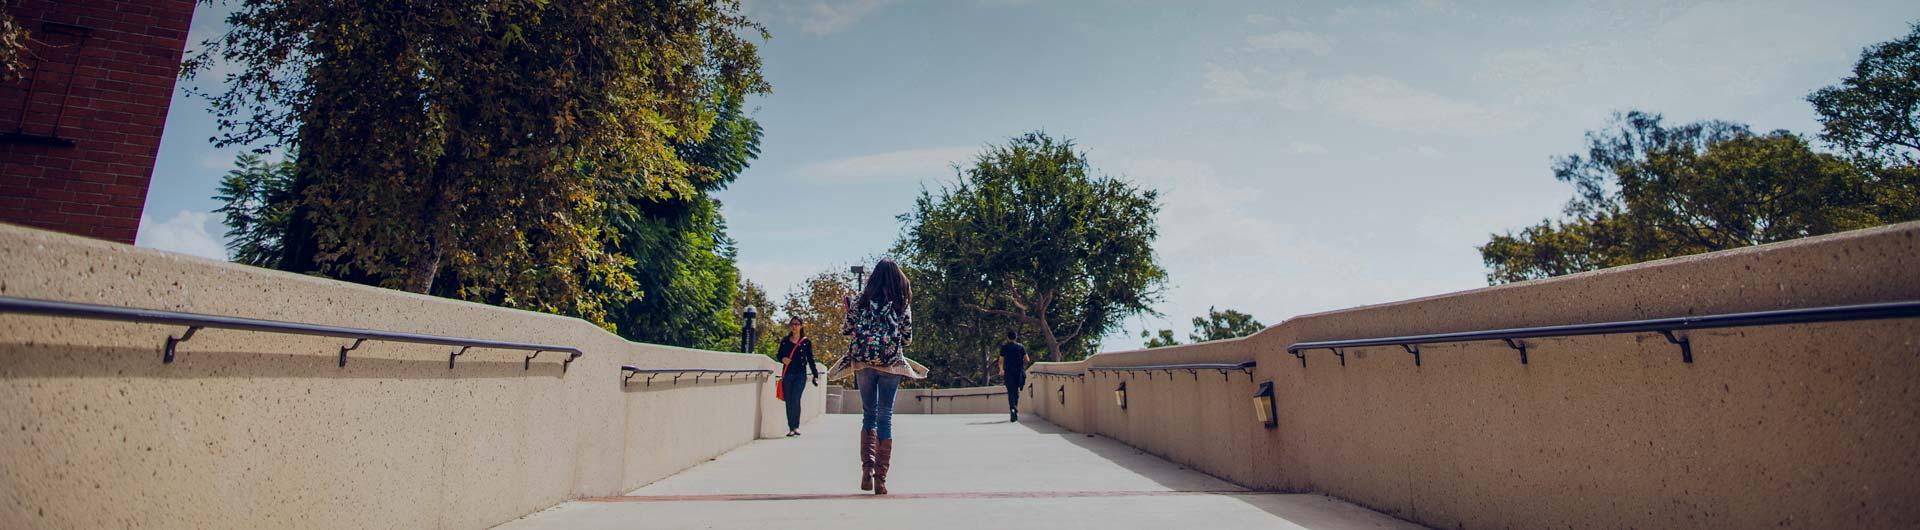 Students walking on bridge